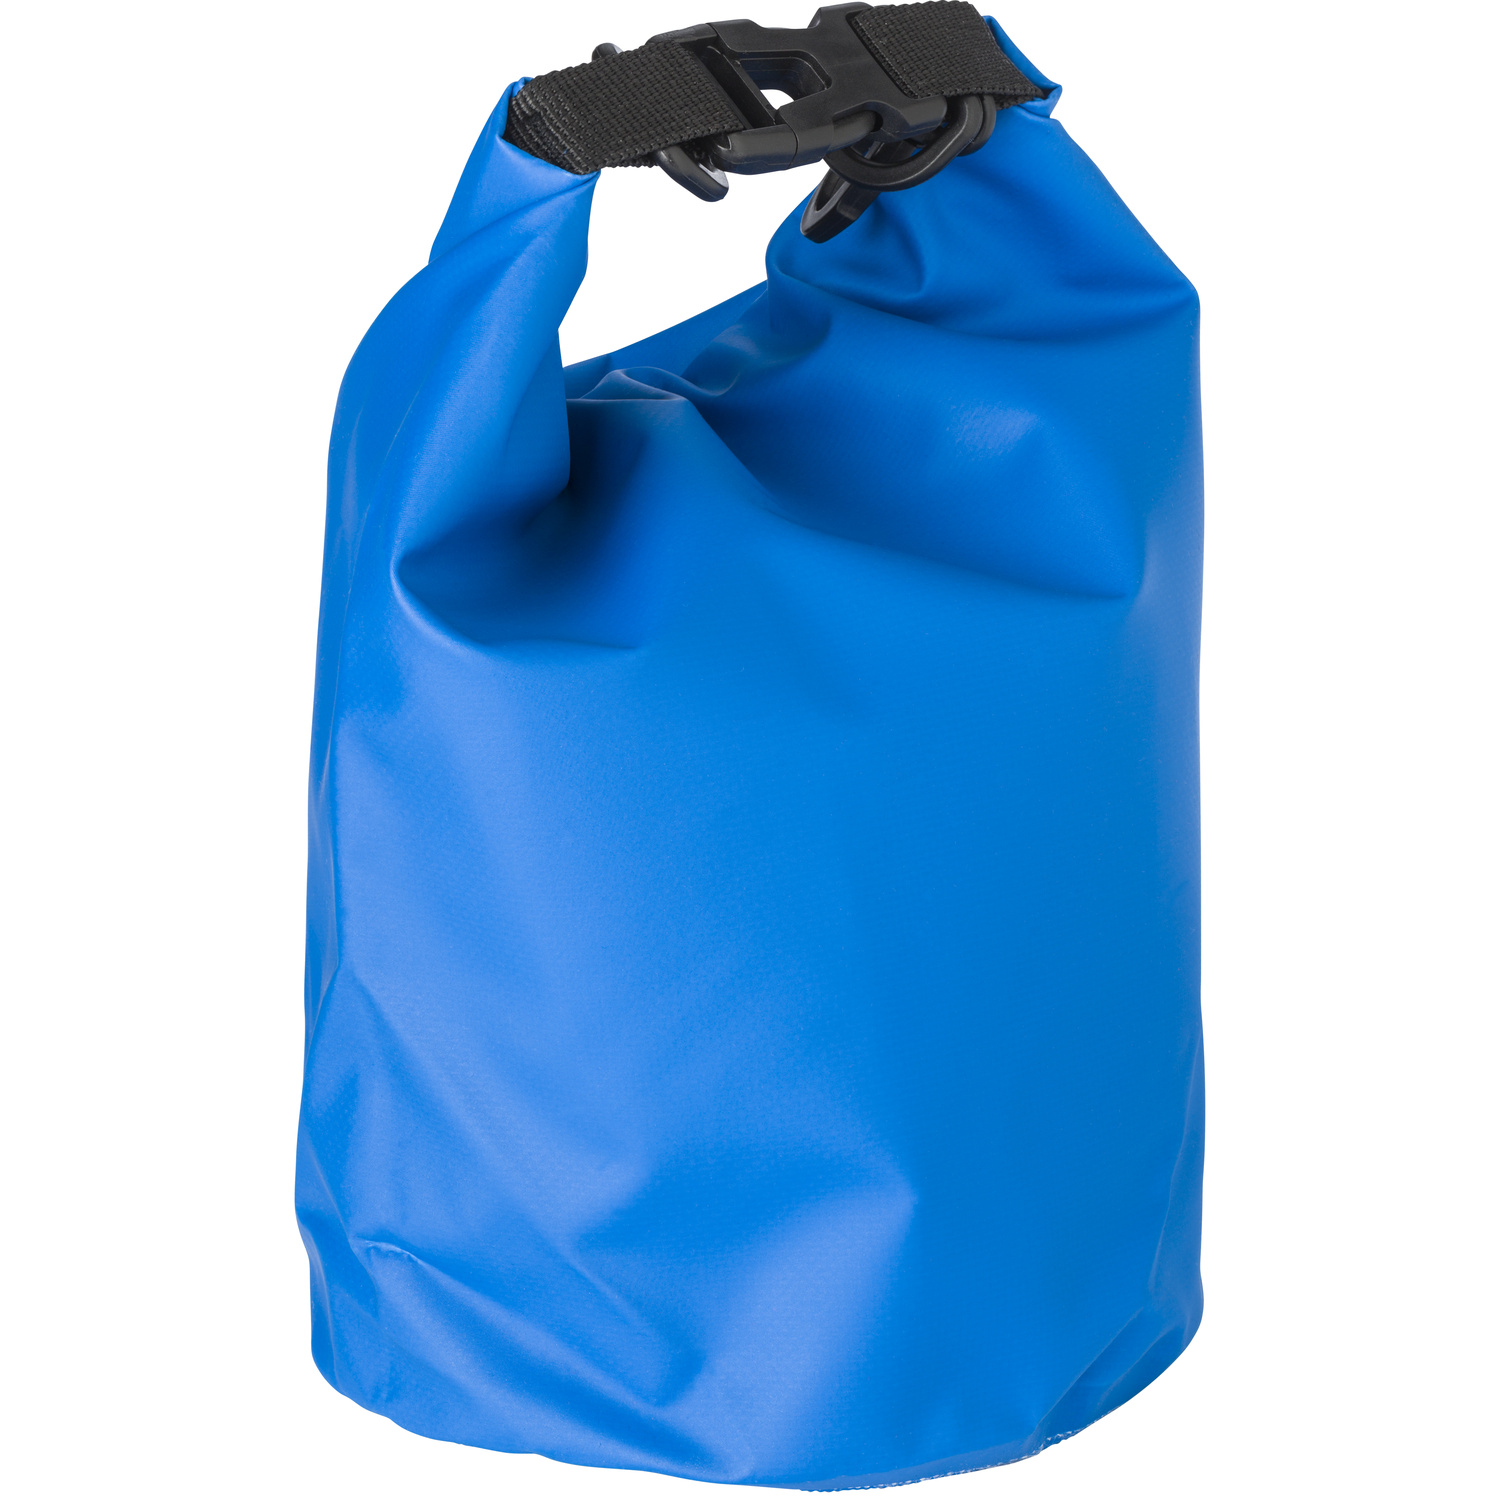 001877 005999999 3d090 frt pro01 fal - Waterproof beach bag